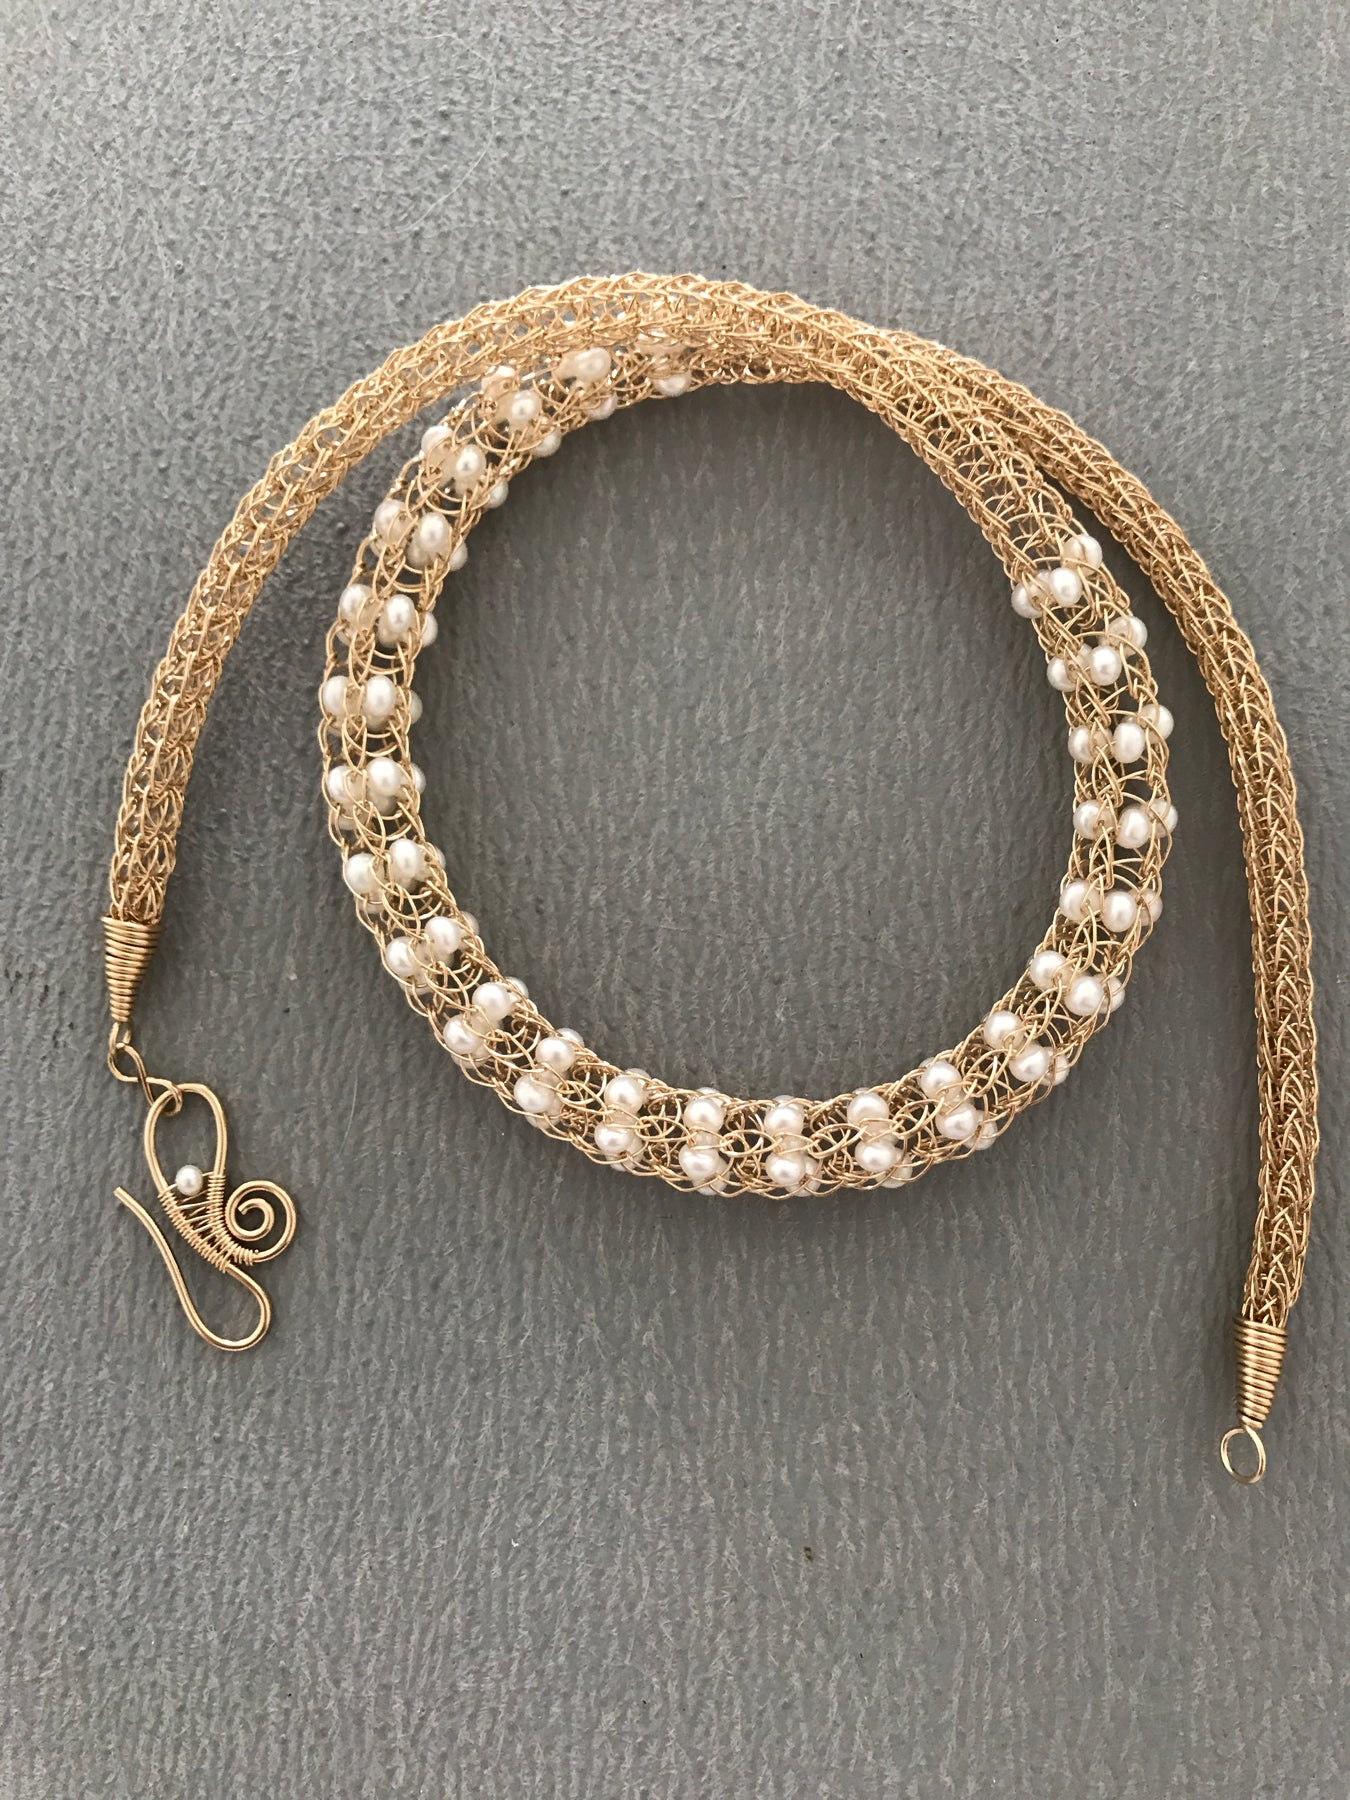 Viking Knit Necklaces – Jan Raven Jewelry Designs